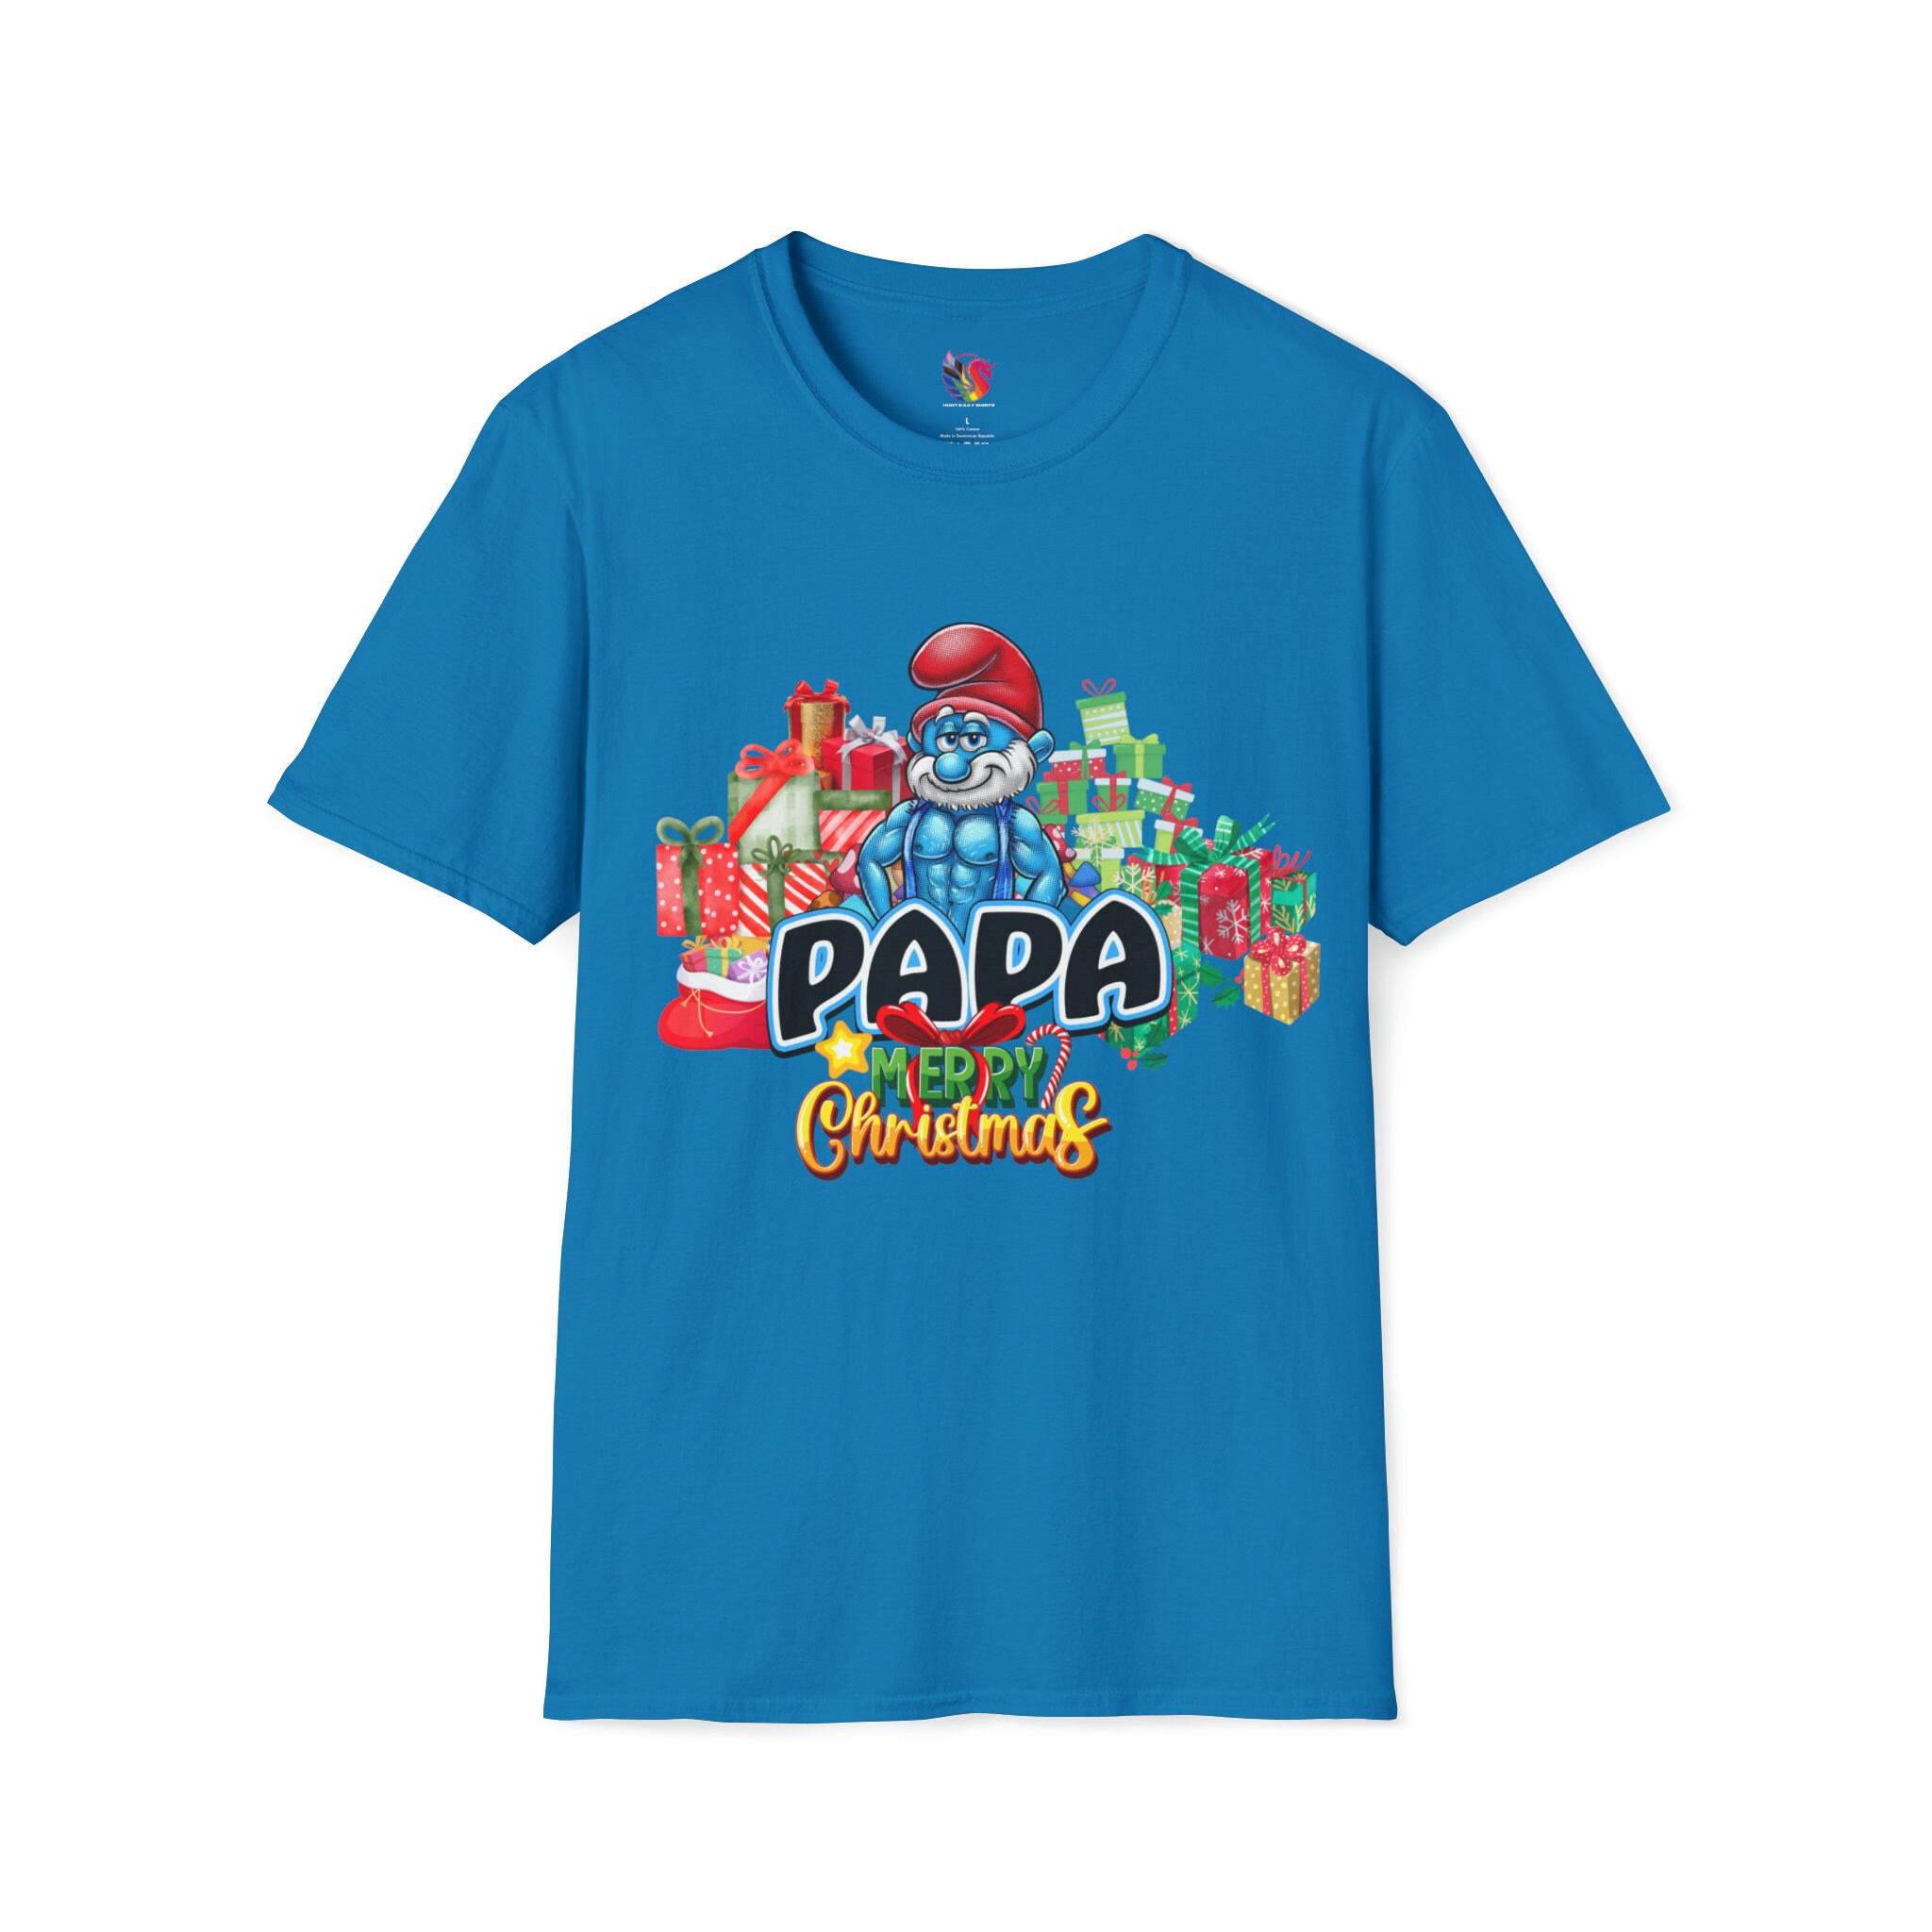 Who's Your Papa? - Smurfs - T-Shirt sold by DaviMay, SKU 1622473